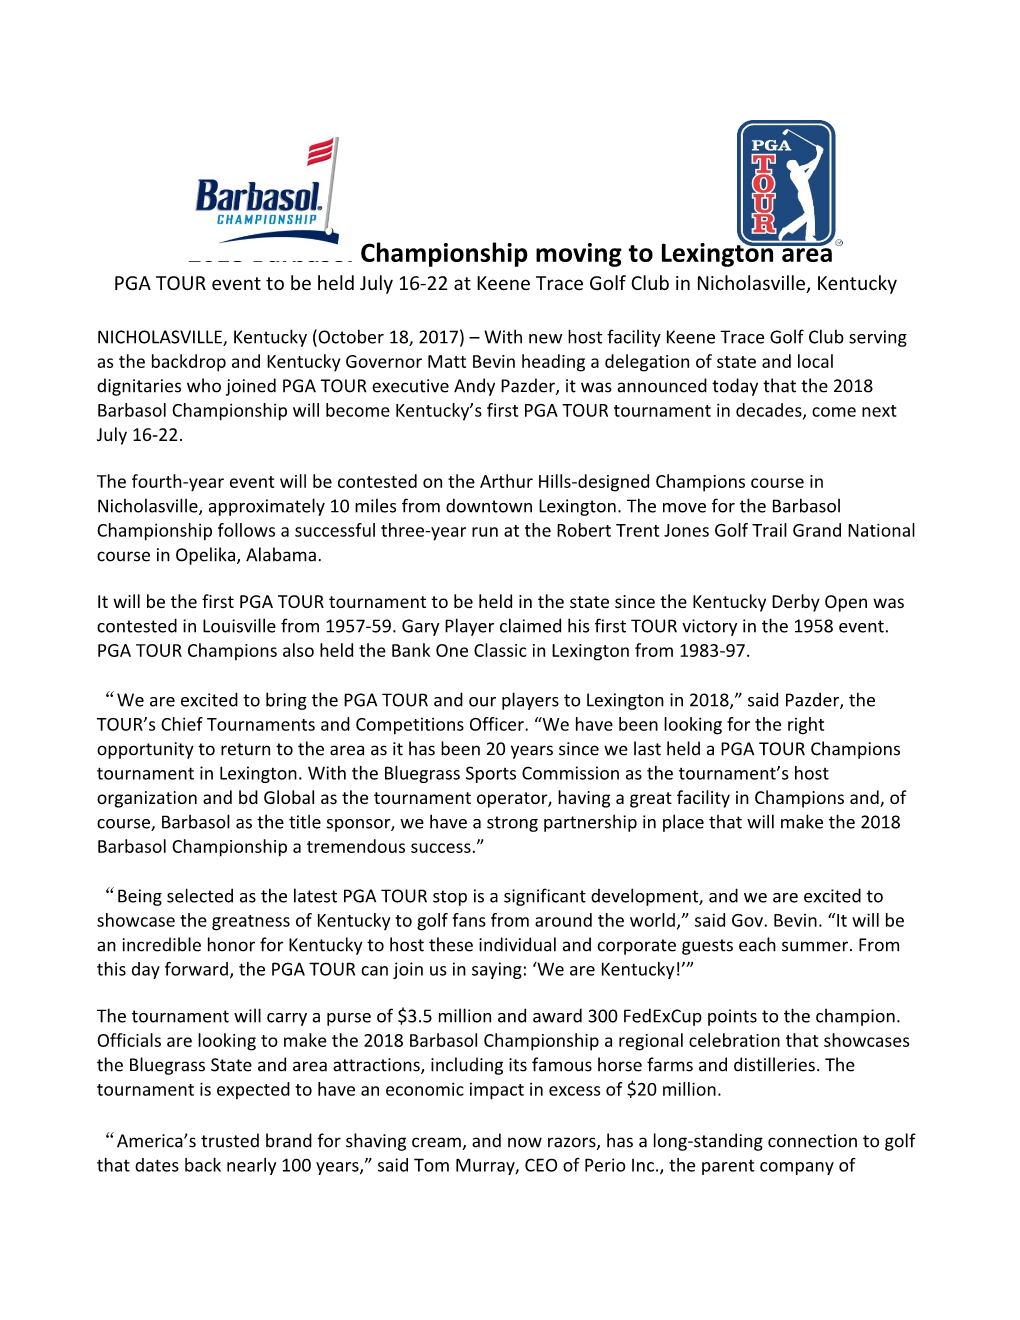 2018 Barbasol Championship Moving to Lexington Area